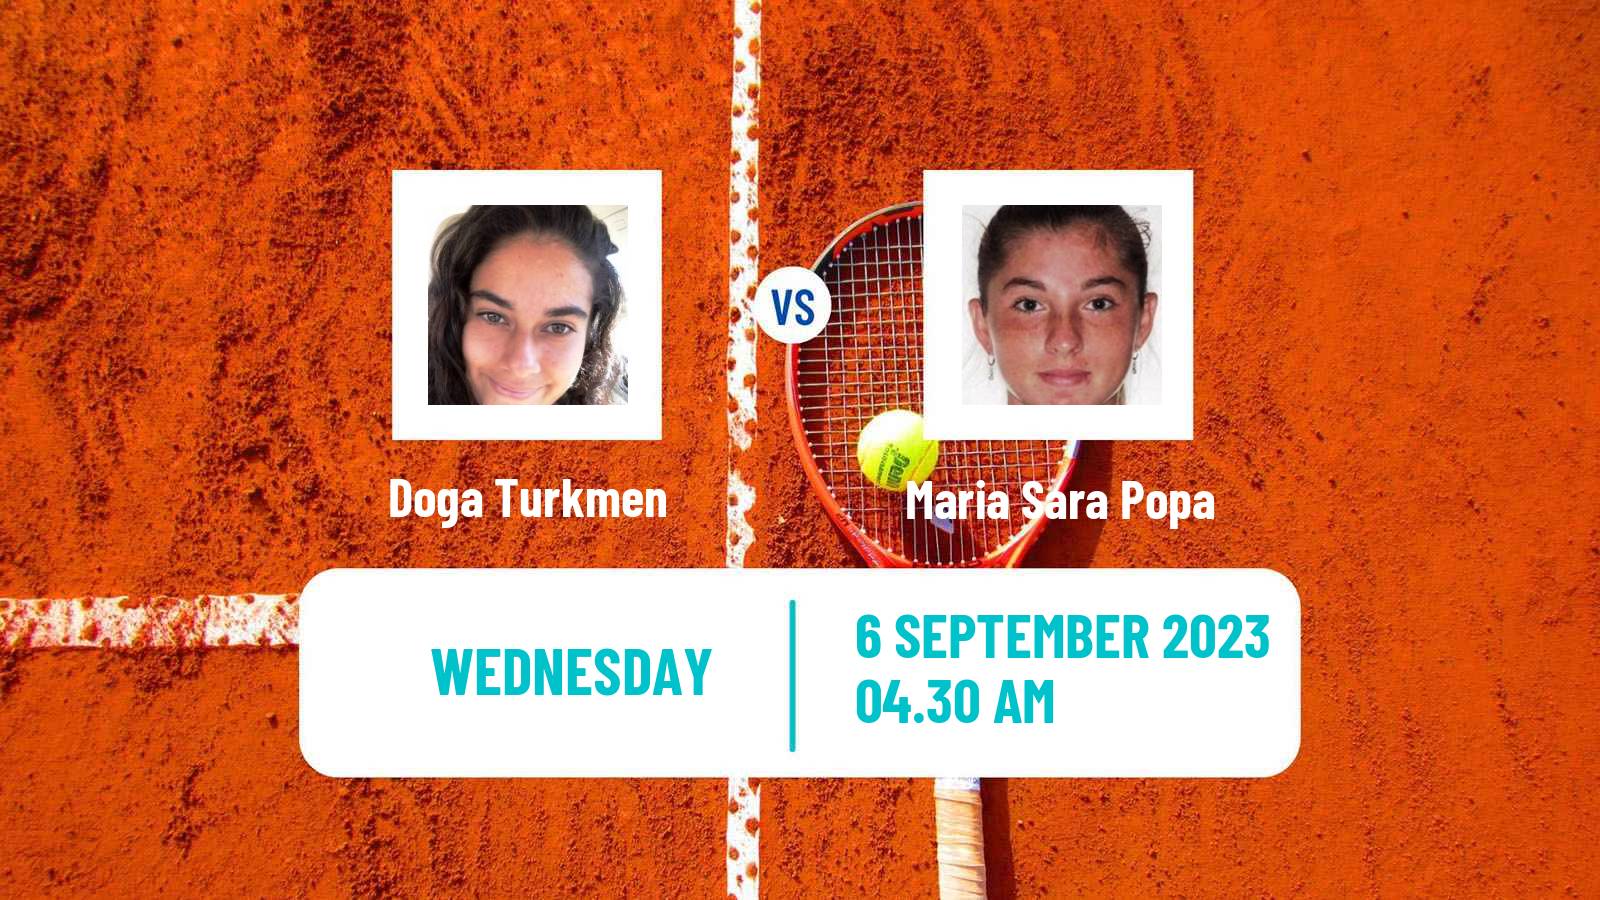 Tennis ITF W15 Buzau Women Doga Turkmen - Maria Sara Popa